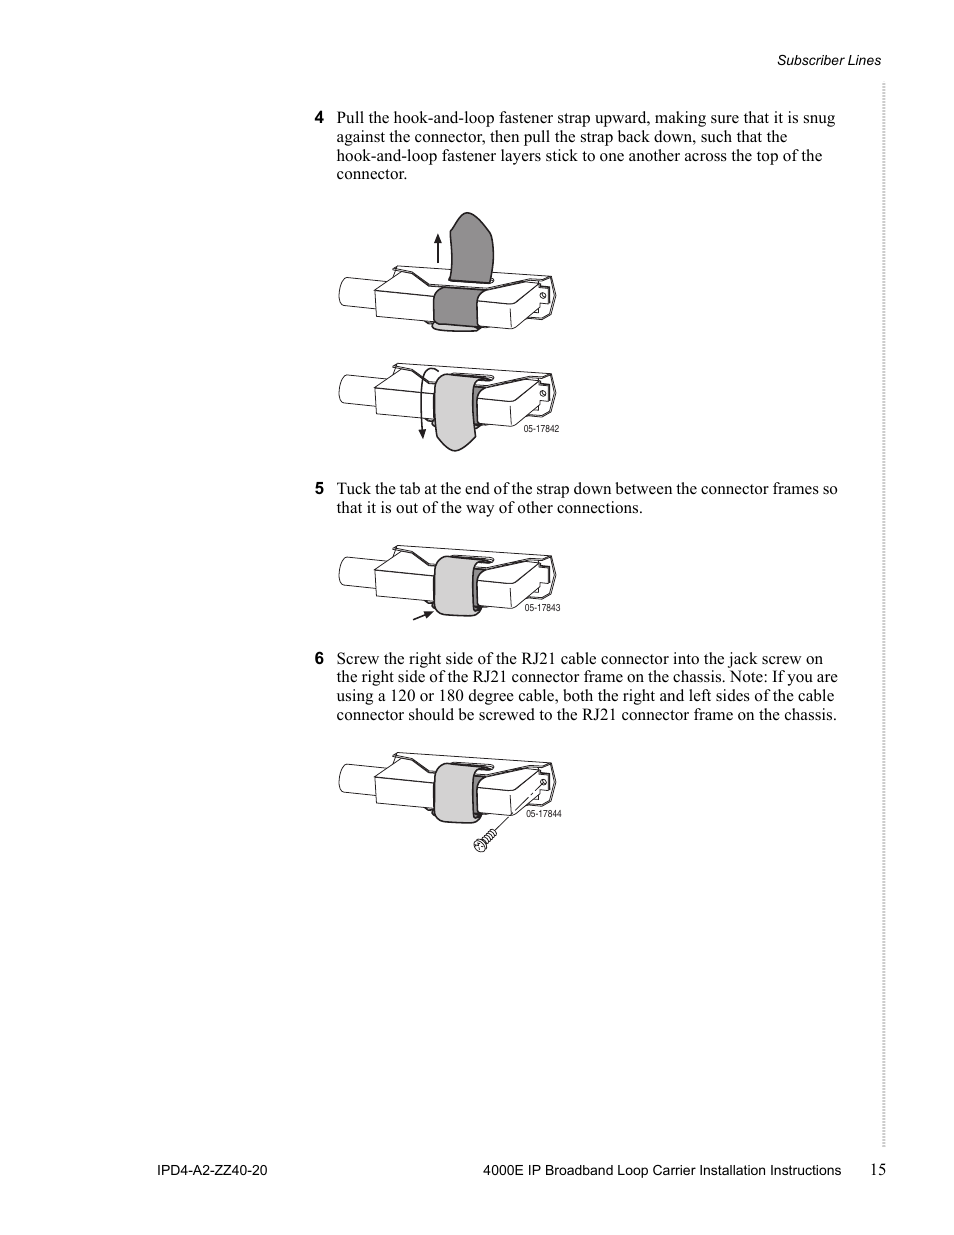 Zhone Technologies 4000E User Manual | Page 15 / 22